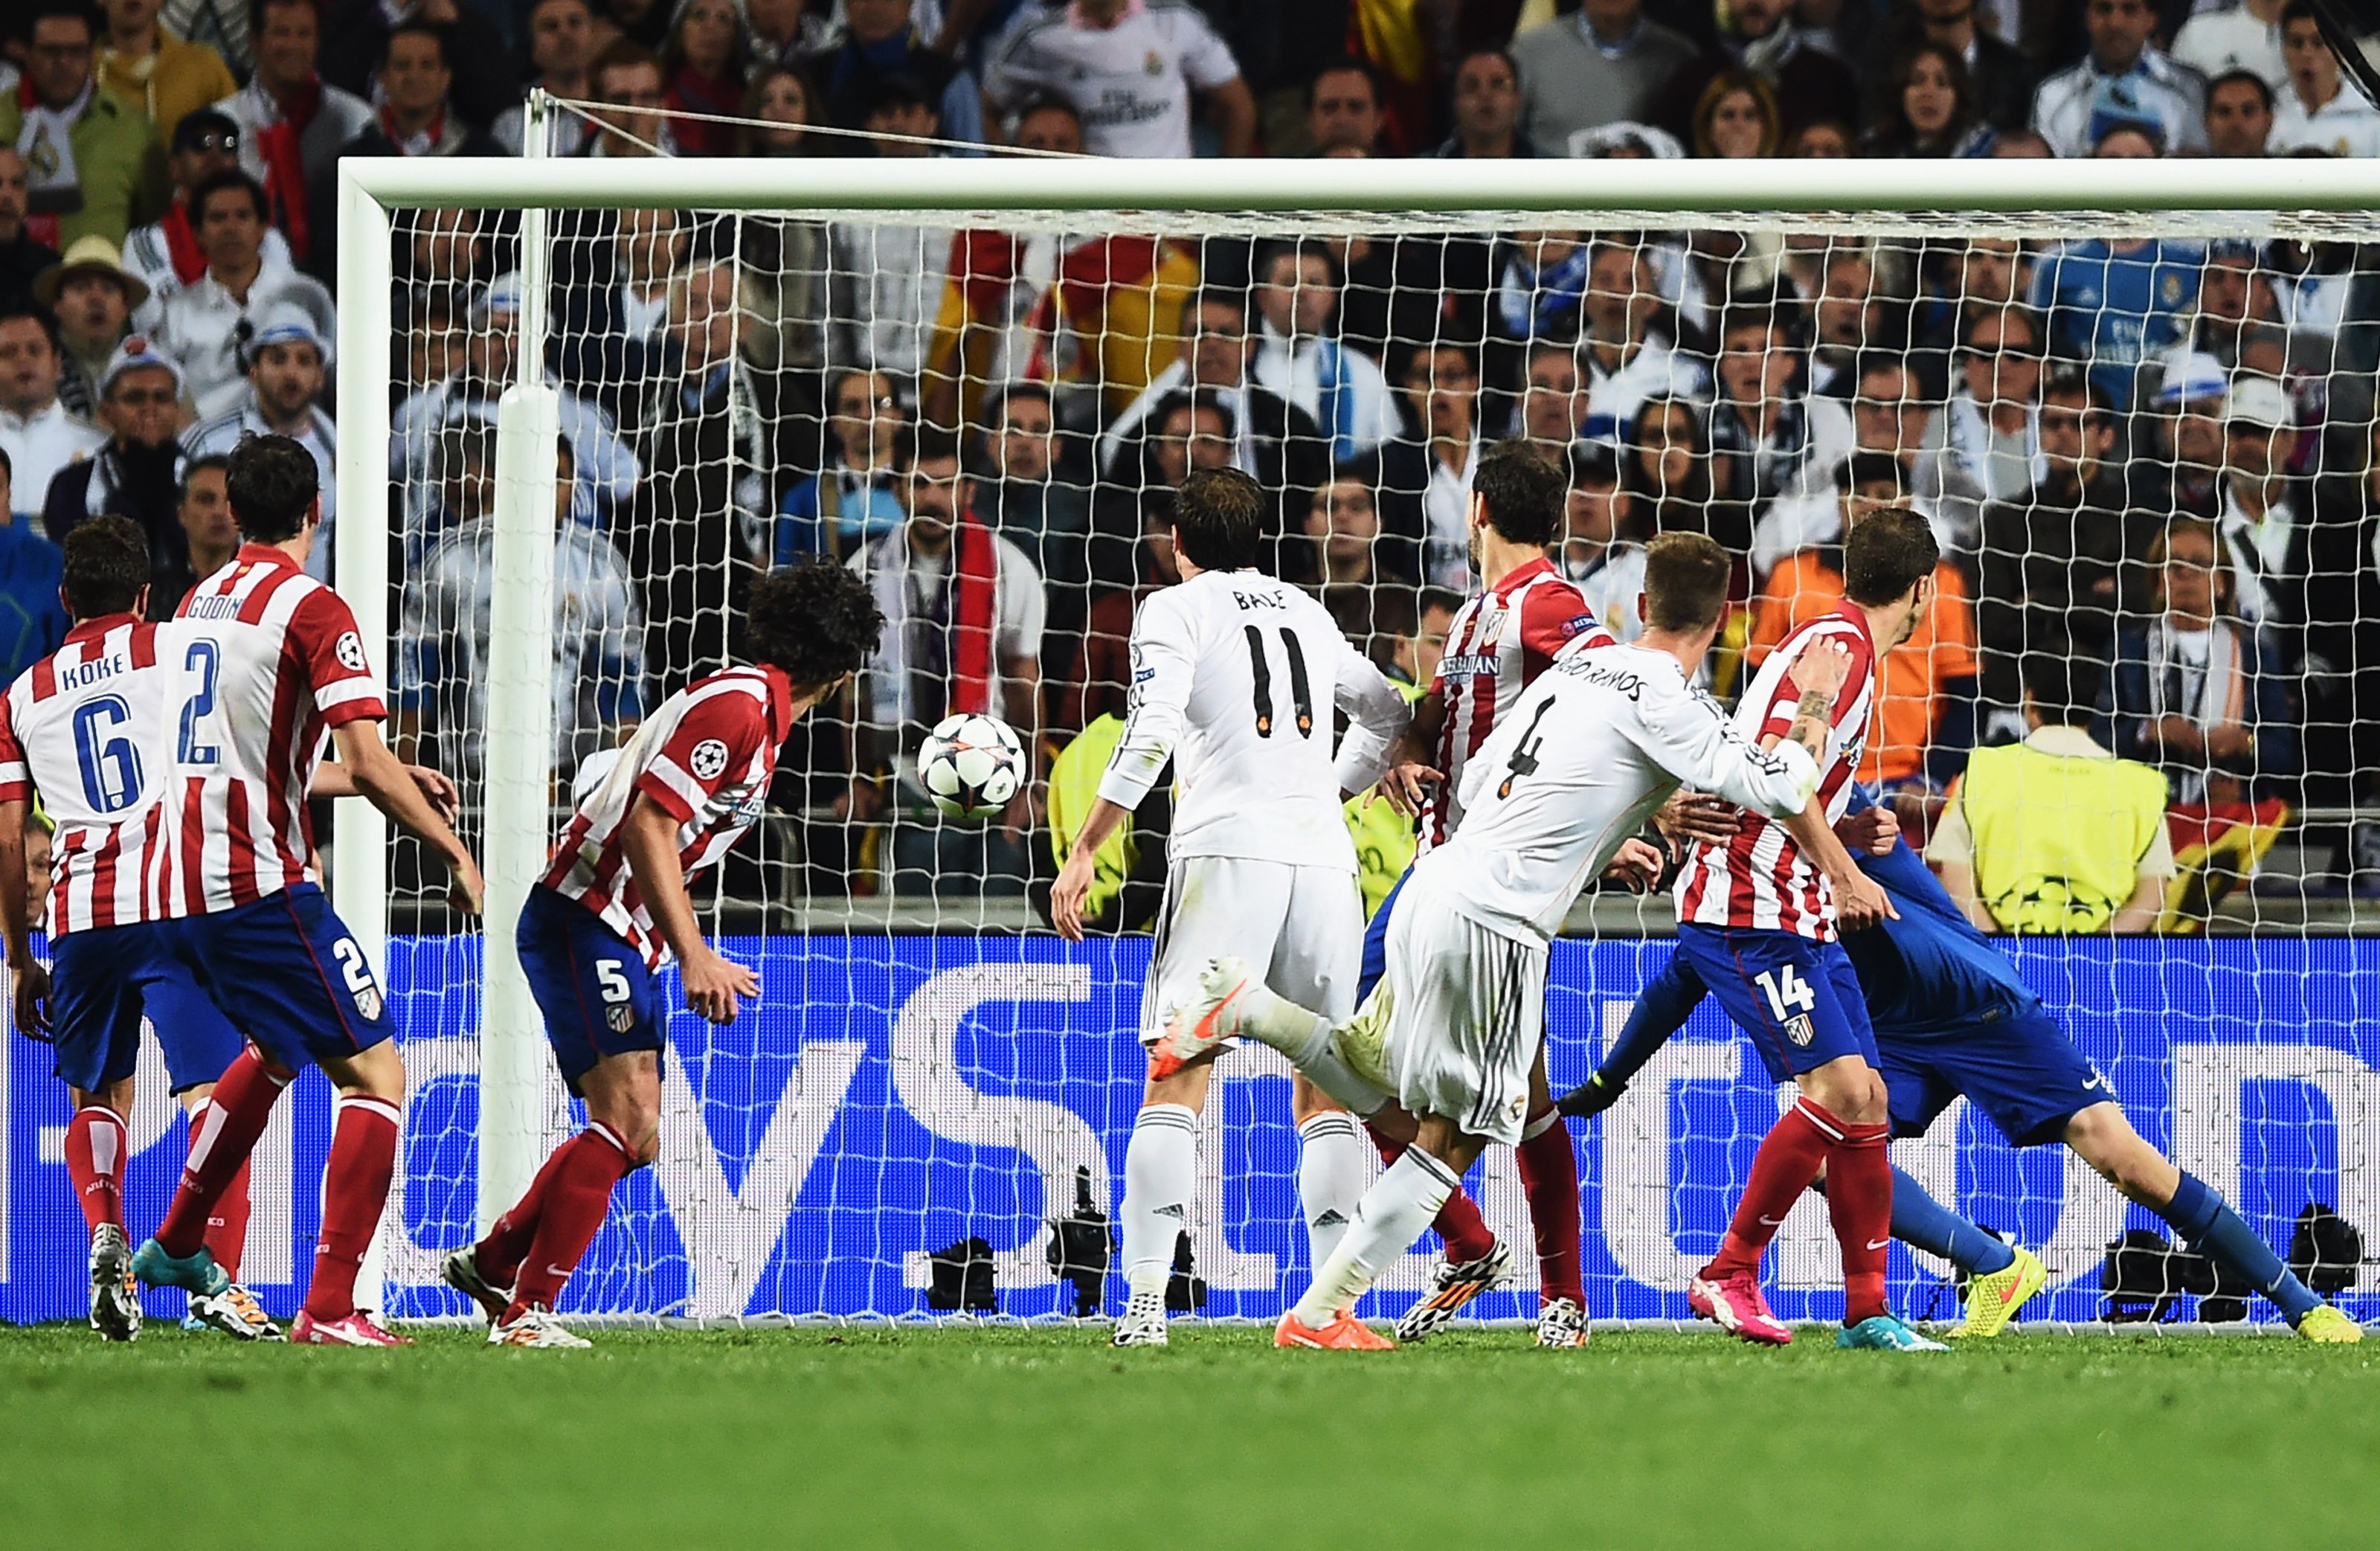 Ramos' scores against Atletico, 2014